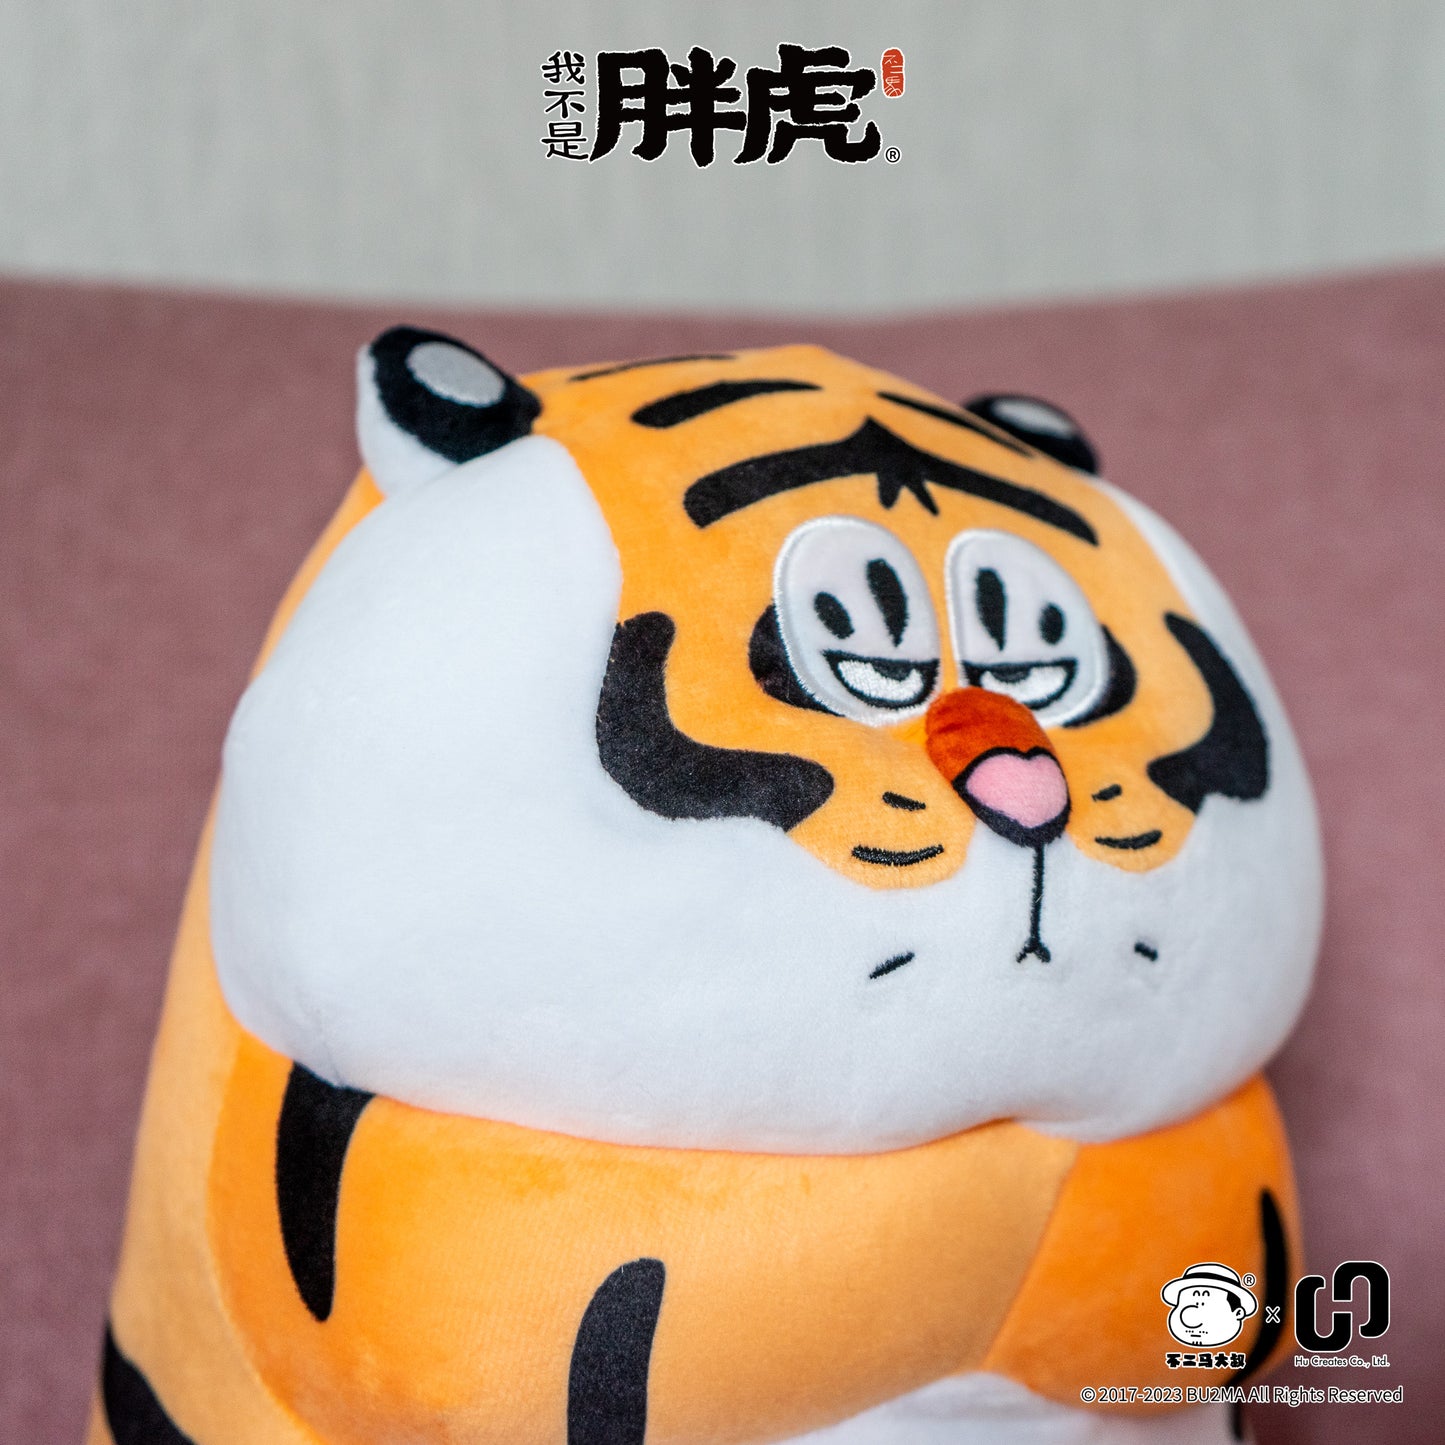 Soft Fat Tiger Fat & Angry Fluffy /Plushie doll , Bu2ma